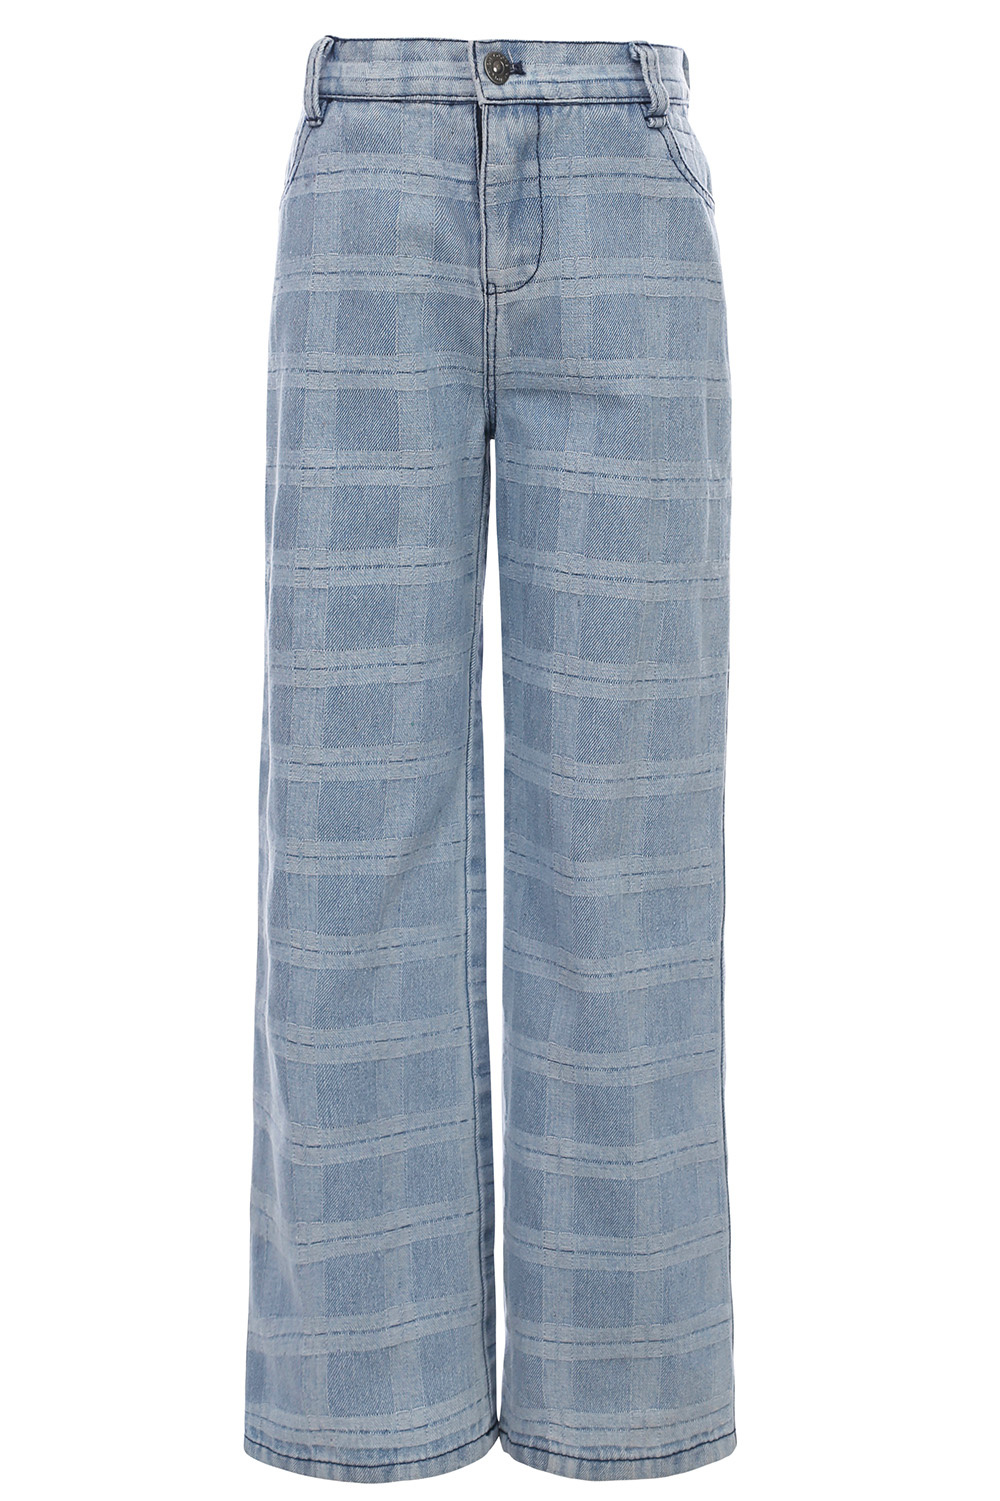 LOOXS 10sixteen Meisjes jeans broek - Geruit